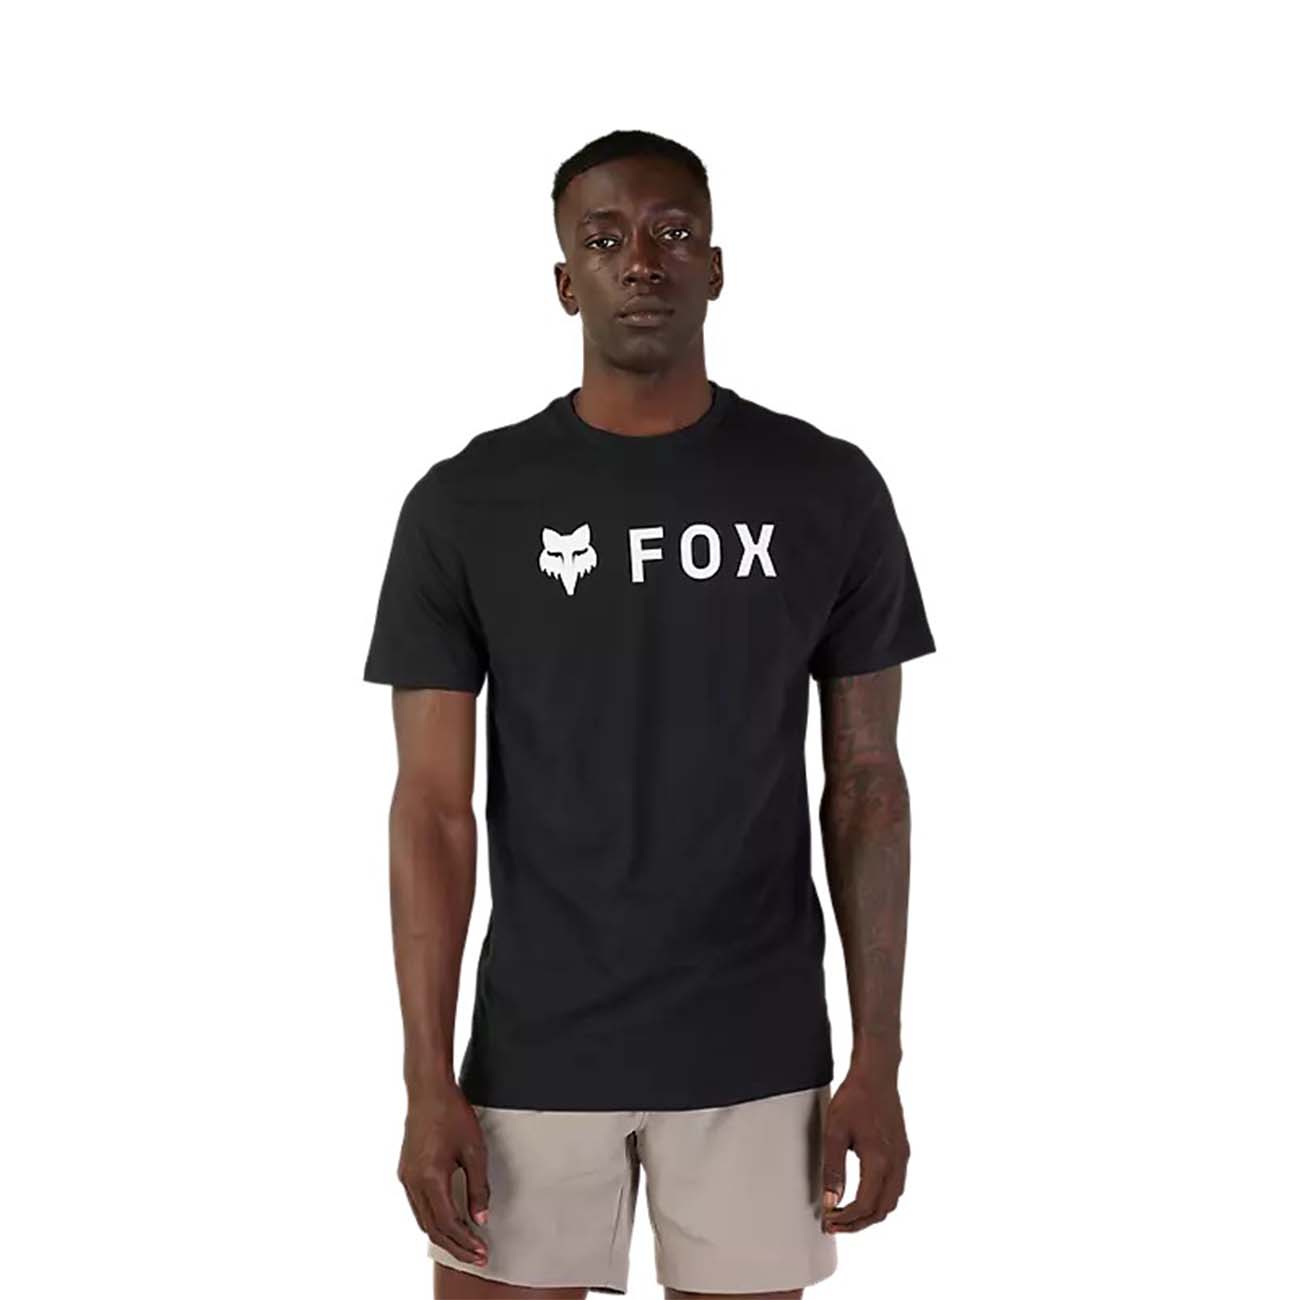 FOX Kolarska Koszulka Z Krótkim Rękawem - ABSOLUTE PREMIUM - Czarny